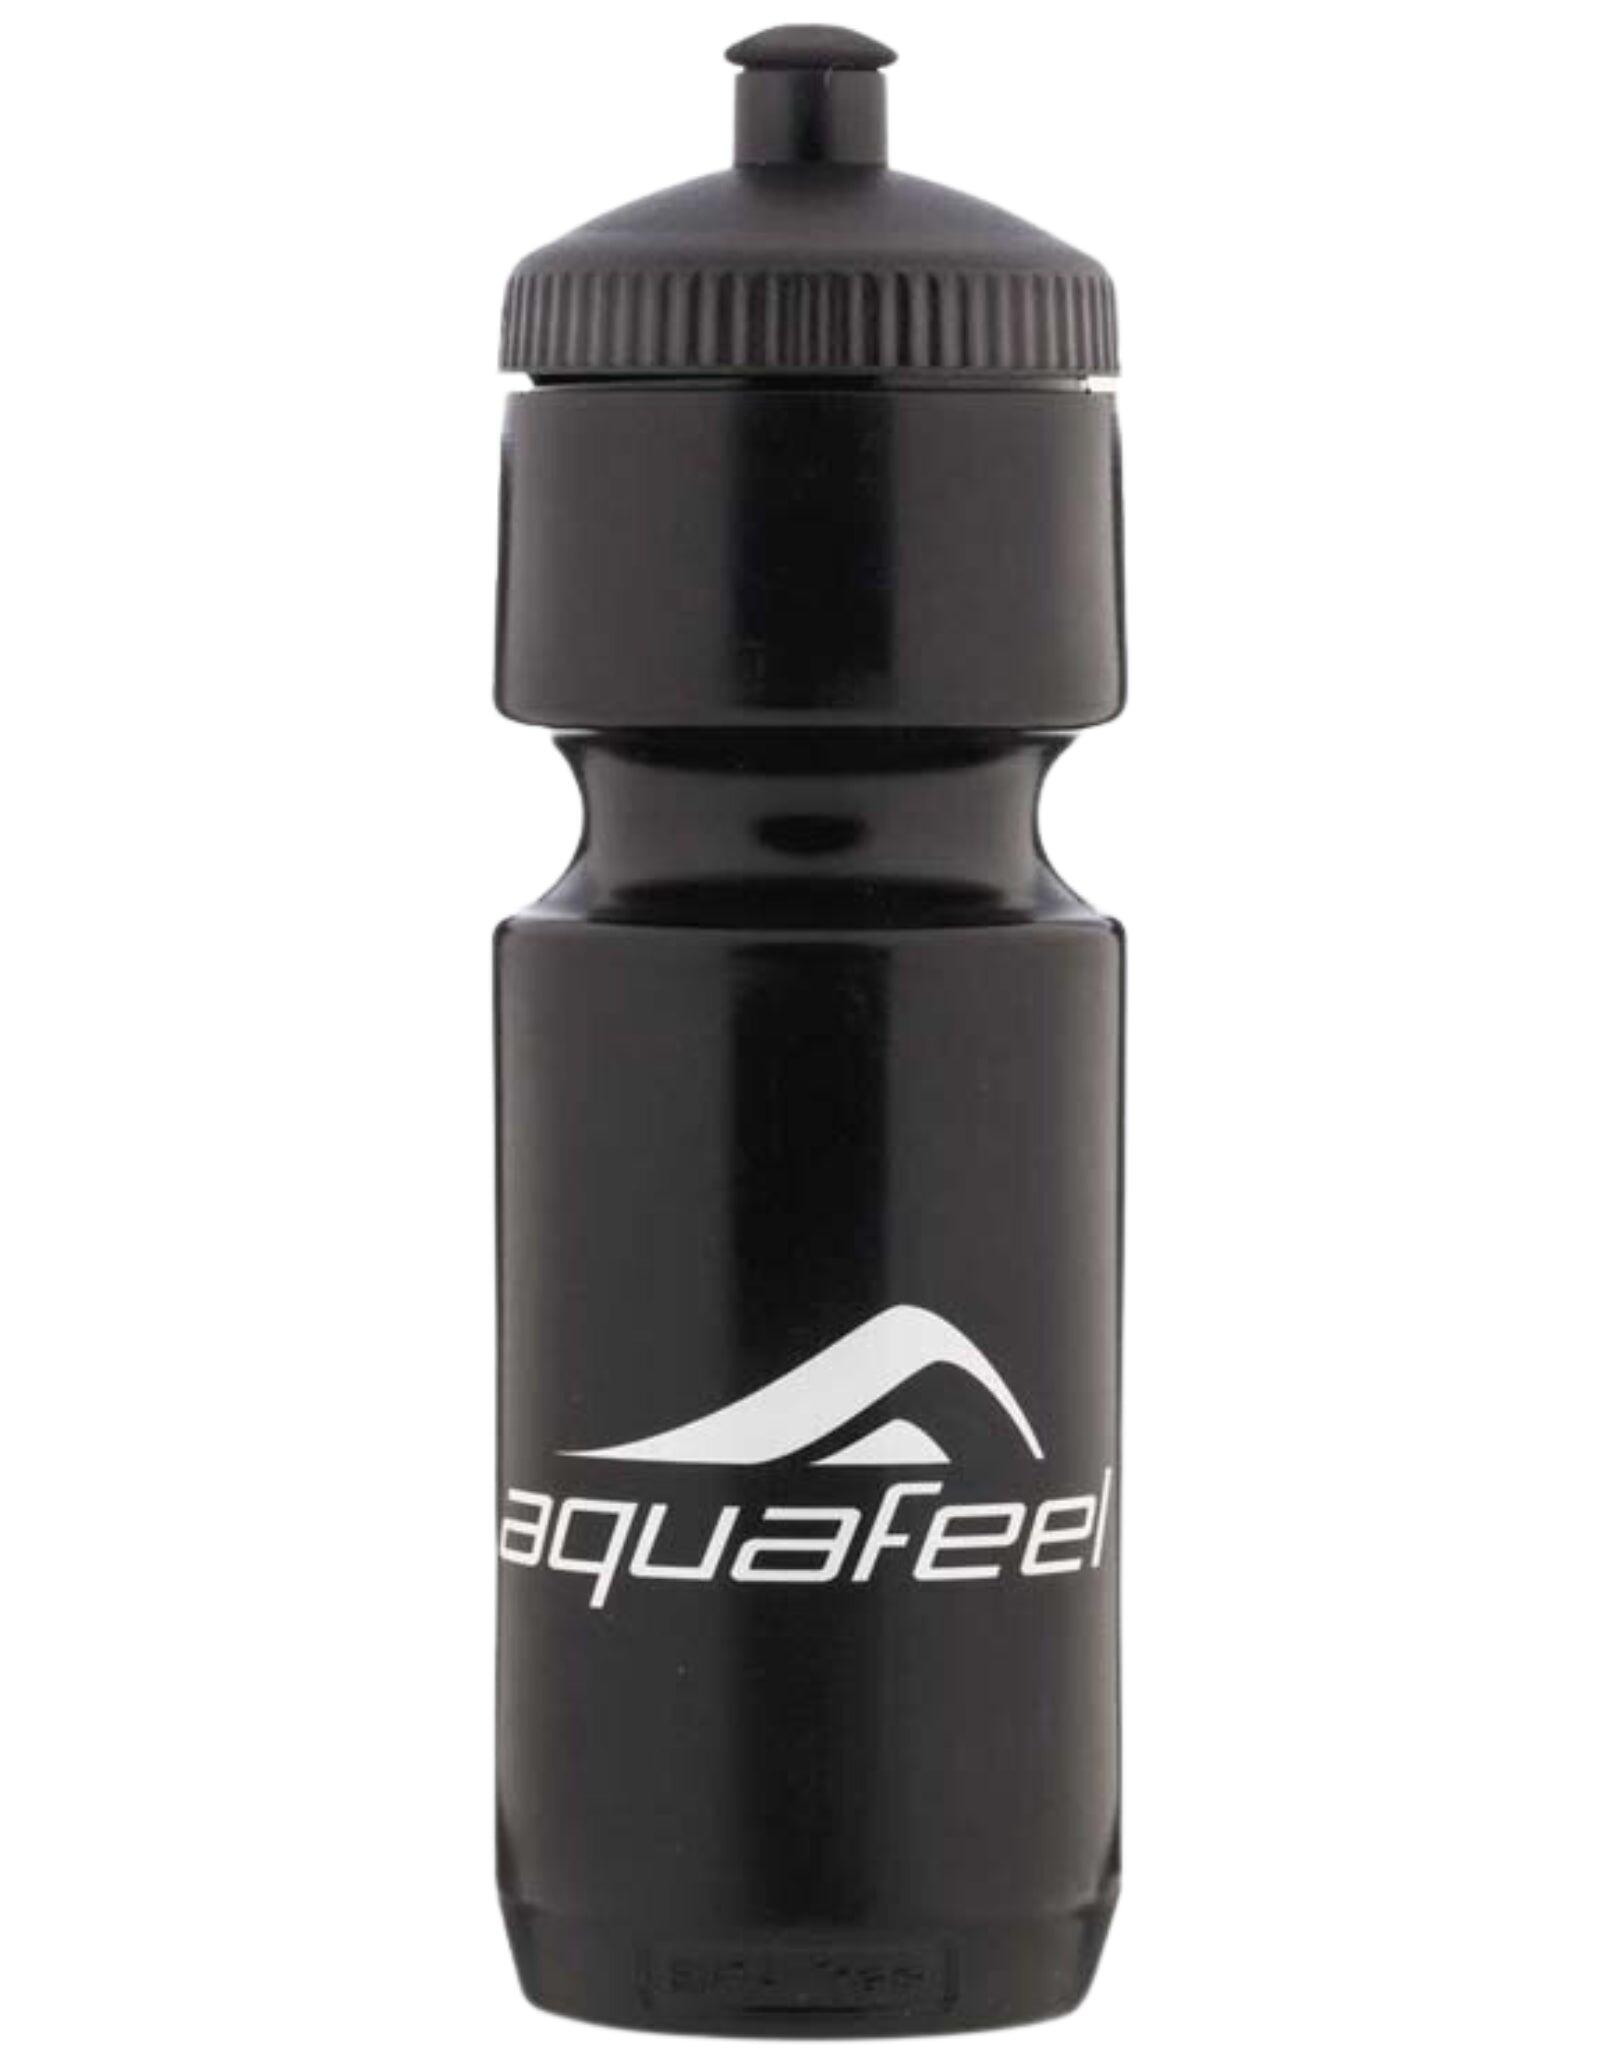 AQUAFEEL Aquafeel Water Bottle - Black